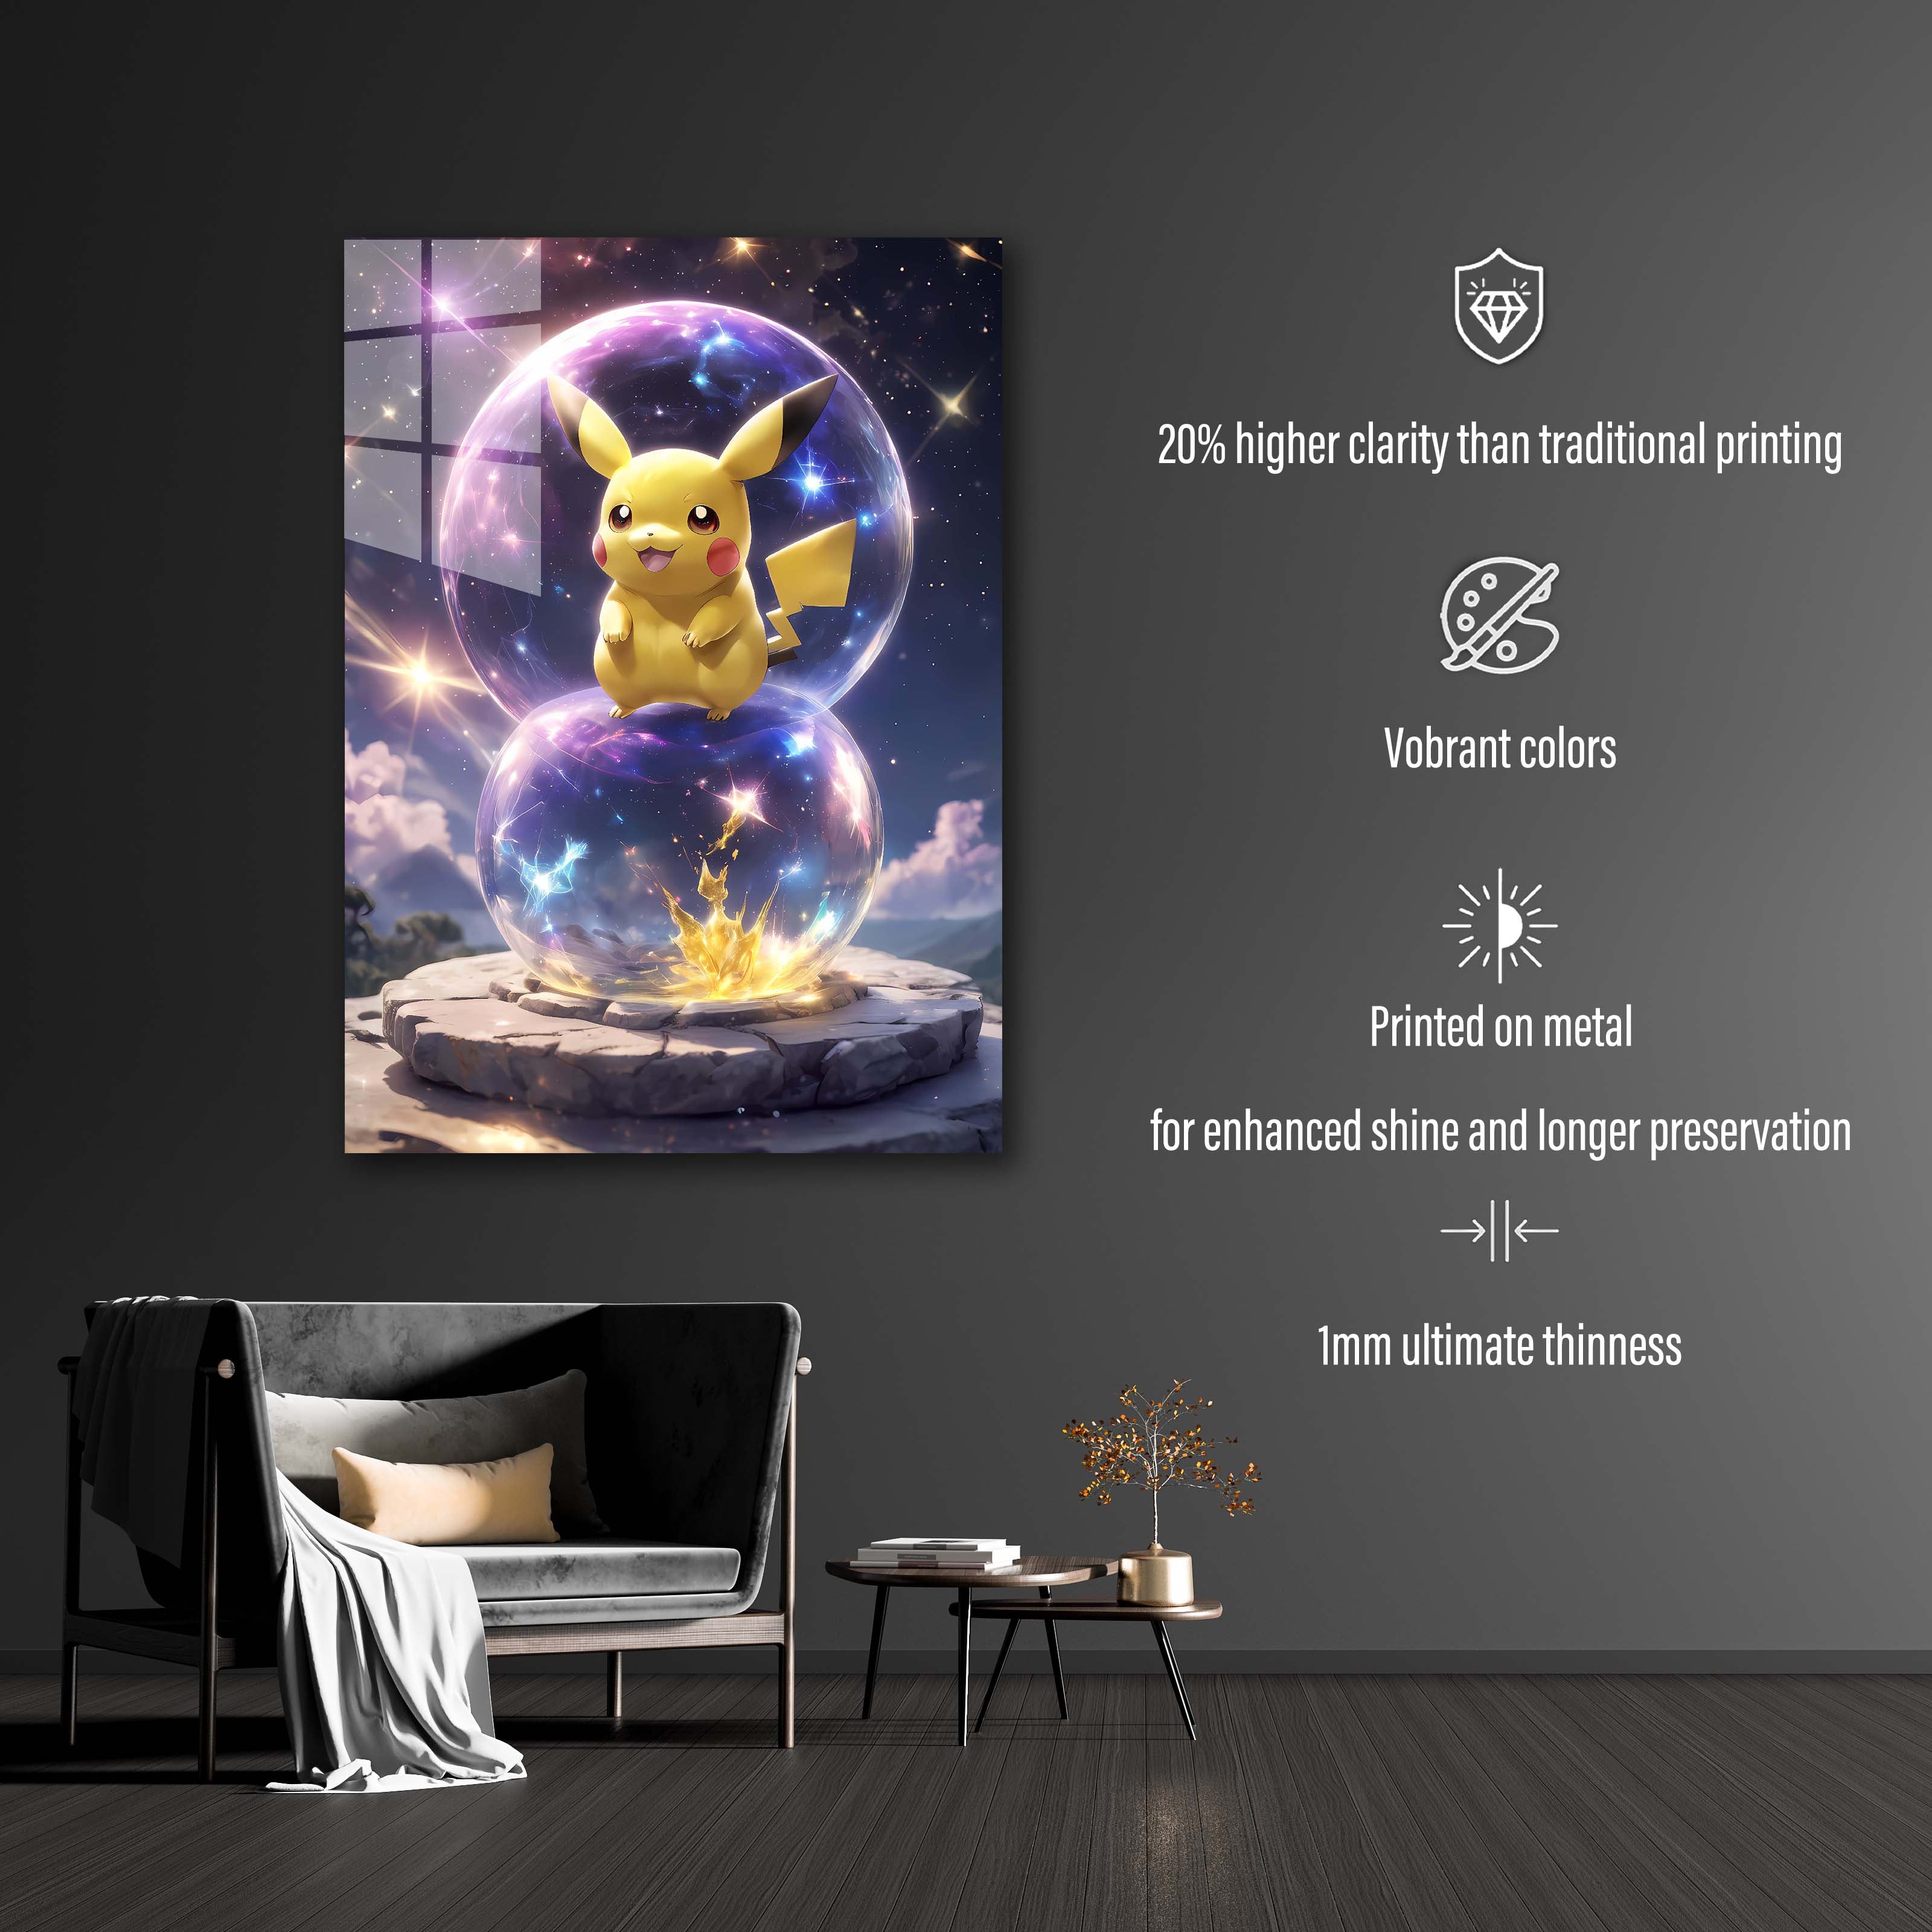 Pikachu2-designed by @Serafin Eastwood